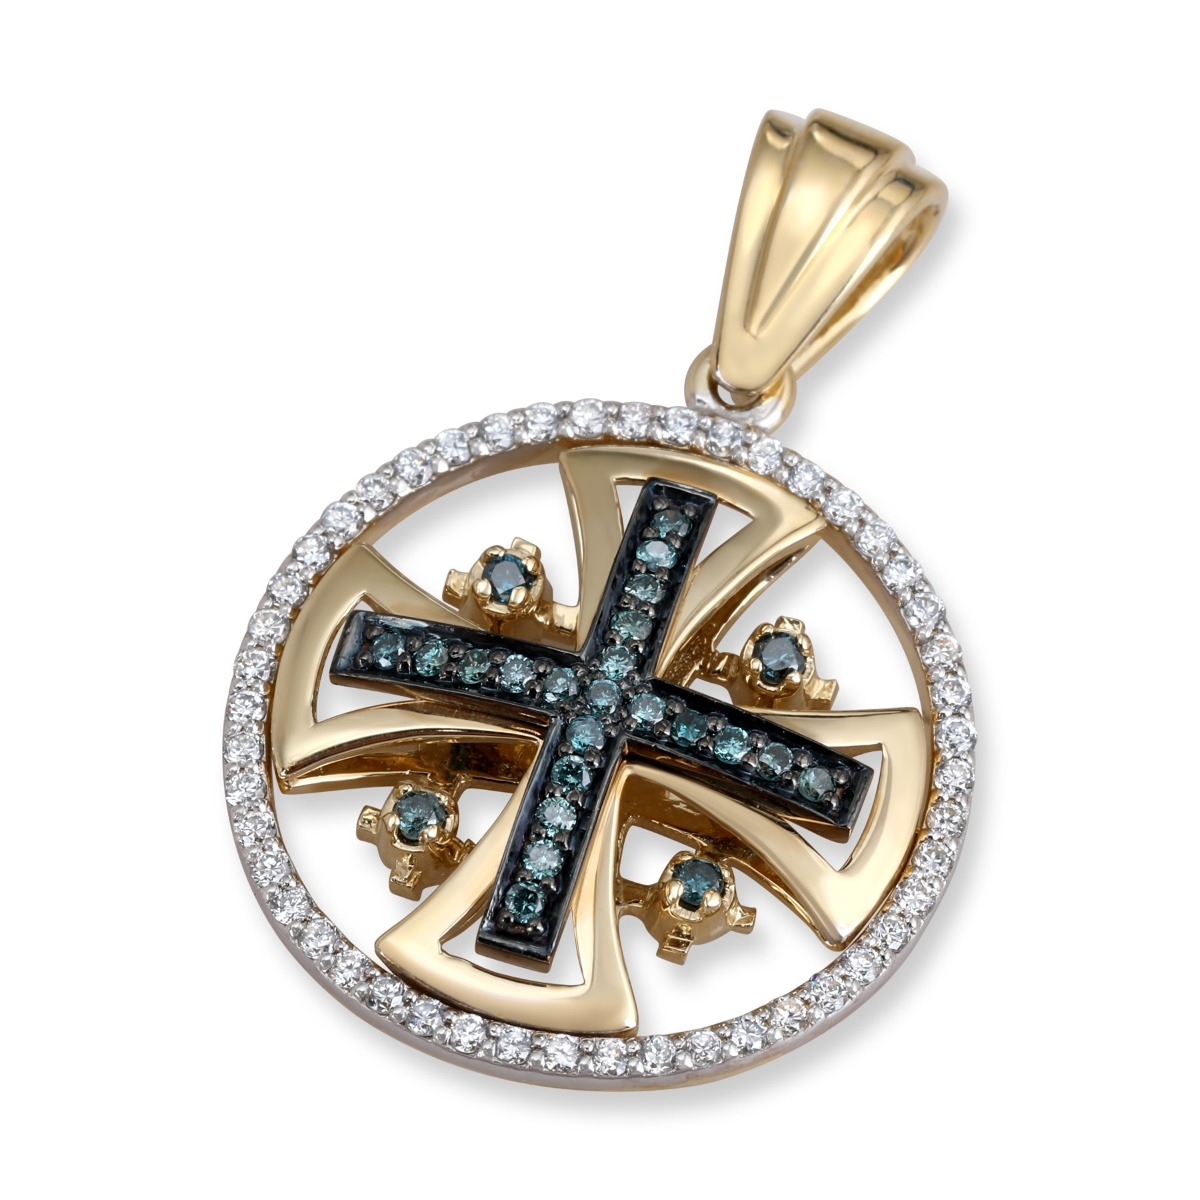 Anbinder Jewelry 14K Yellow Gold White & Fancy Blue Diamond Splayed Jerusalem Cross Halo Pendant with 73 Diamonds - 1